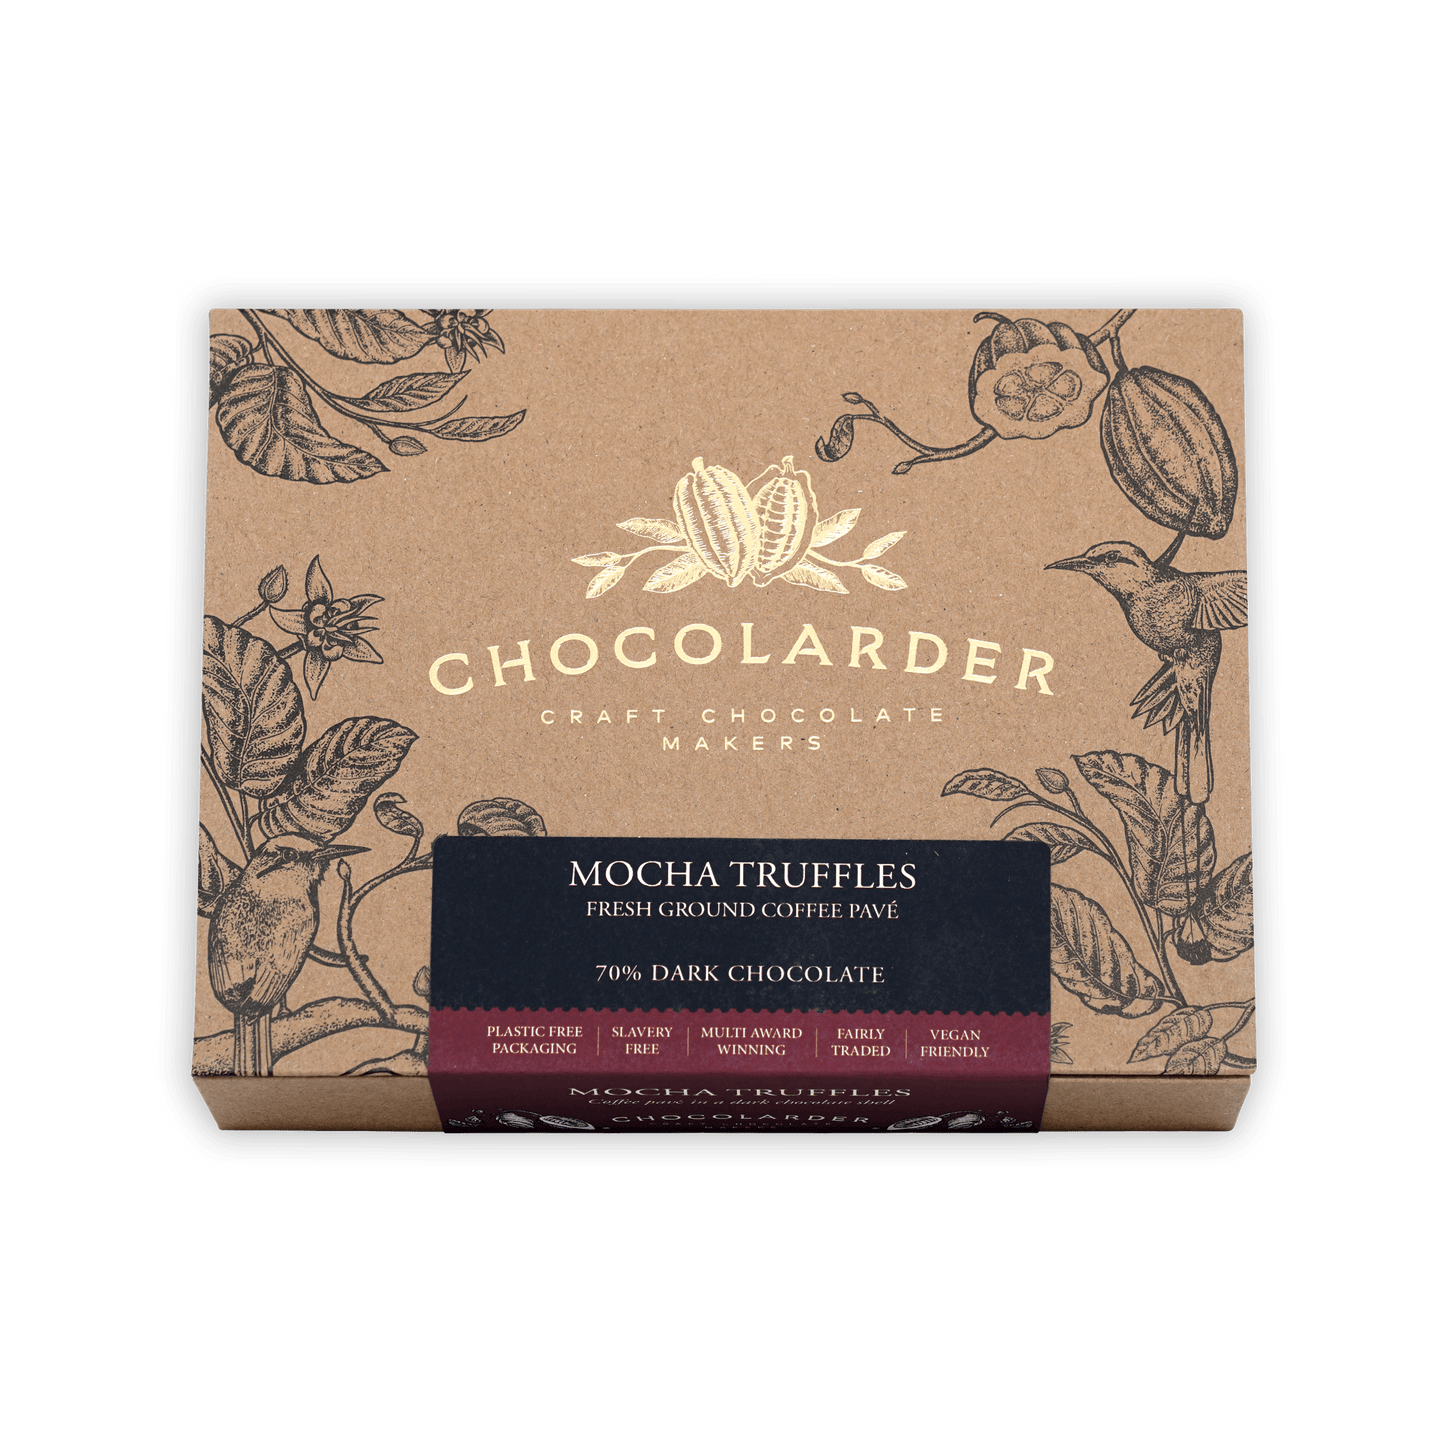 Chocolarder Mocha Truffles Box (12 pcs)